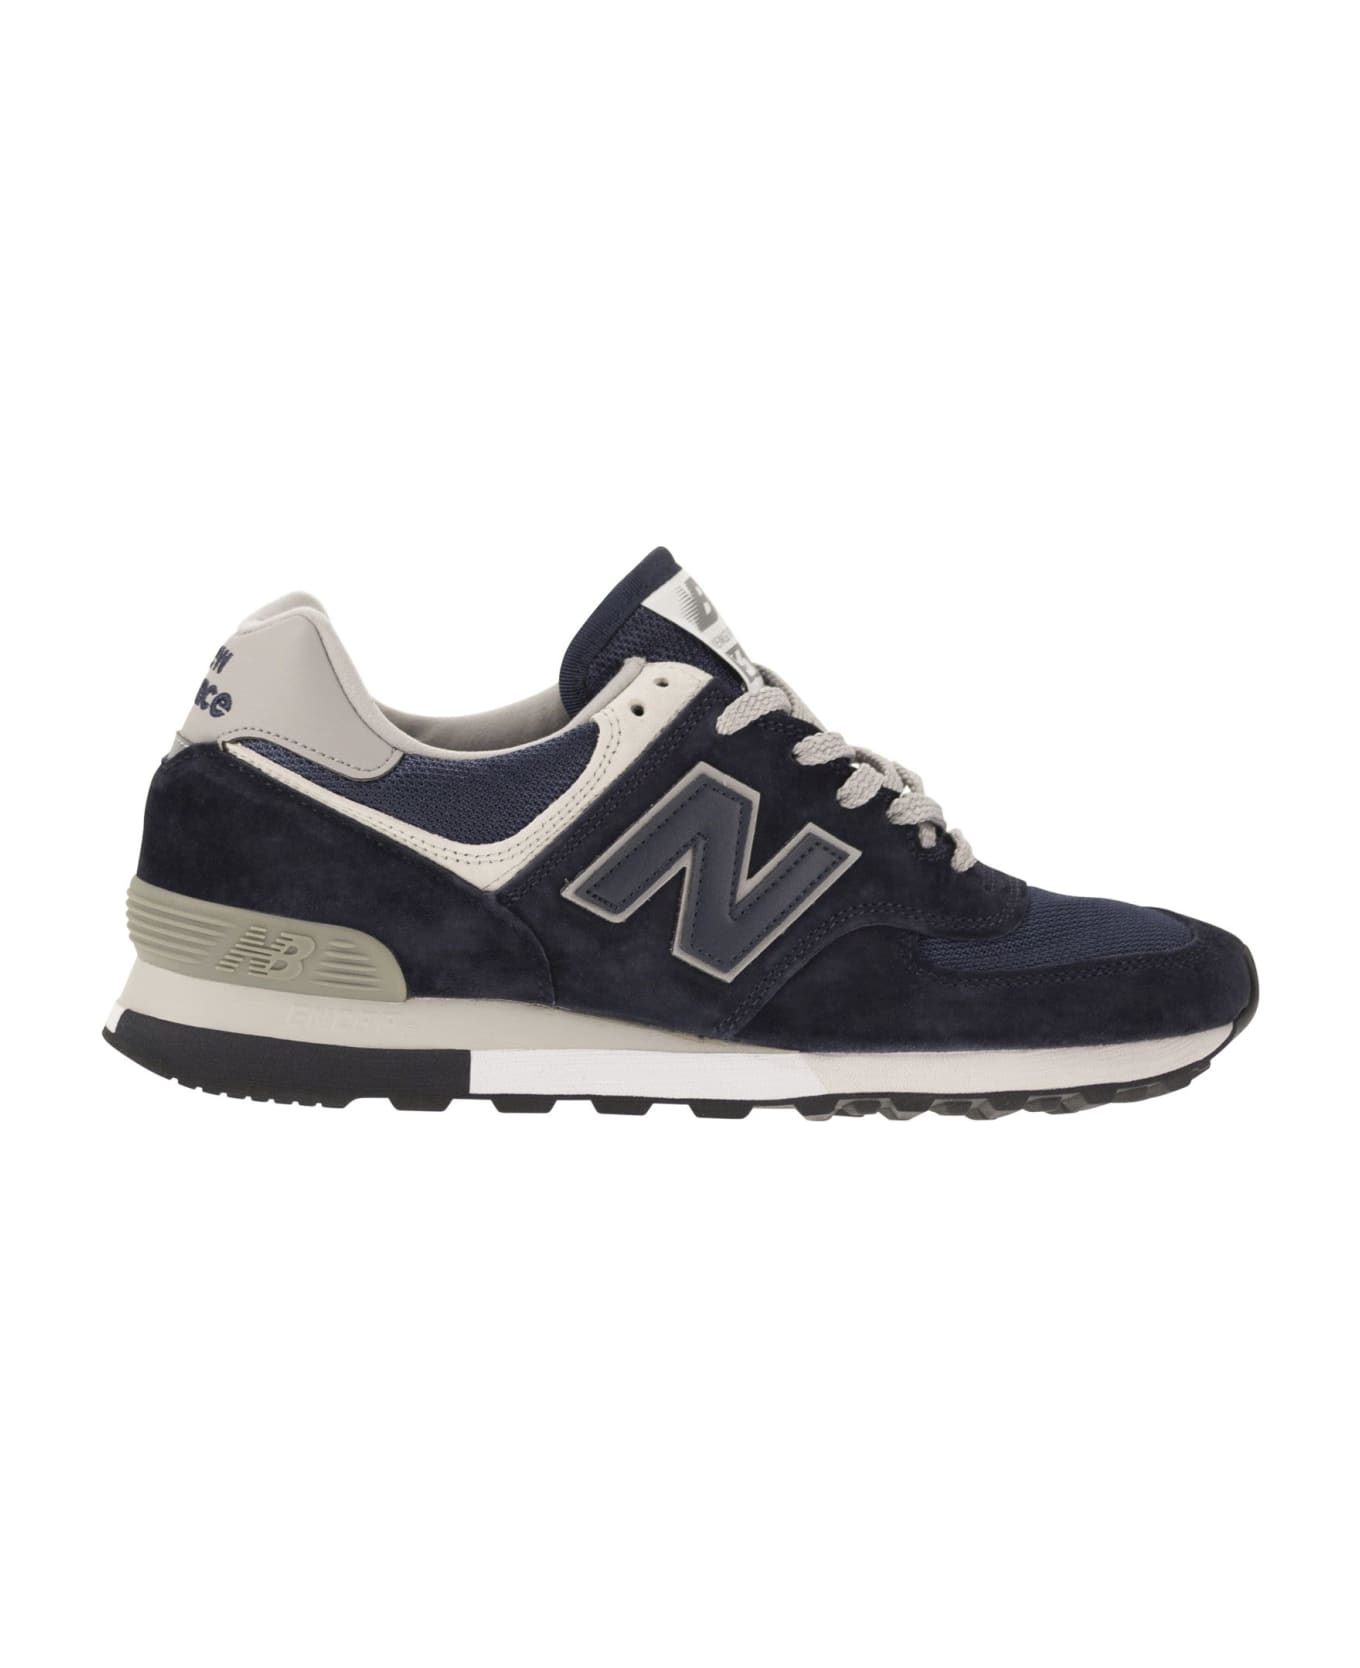 New Balance 576 - Sneakers - Navy スニーカー